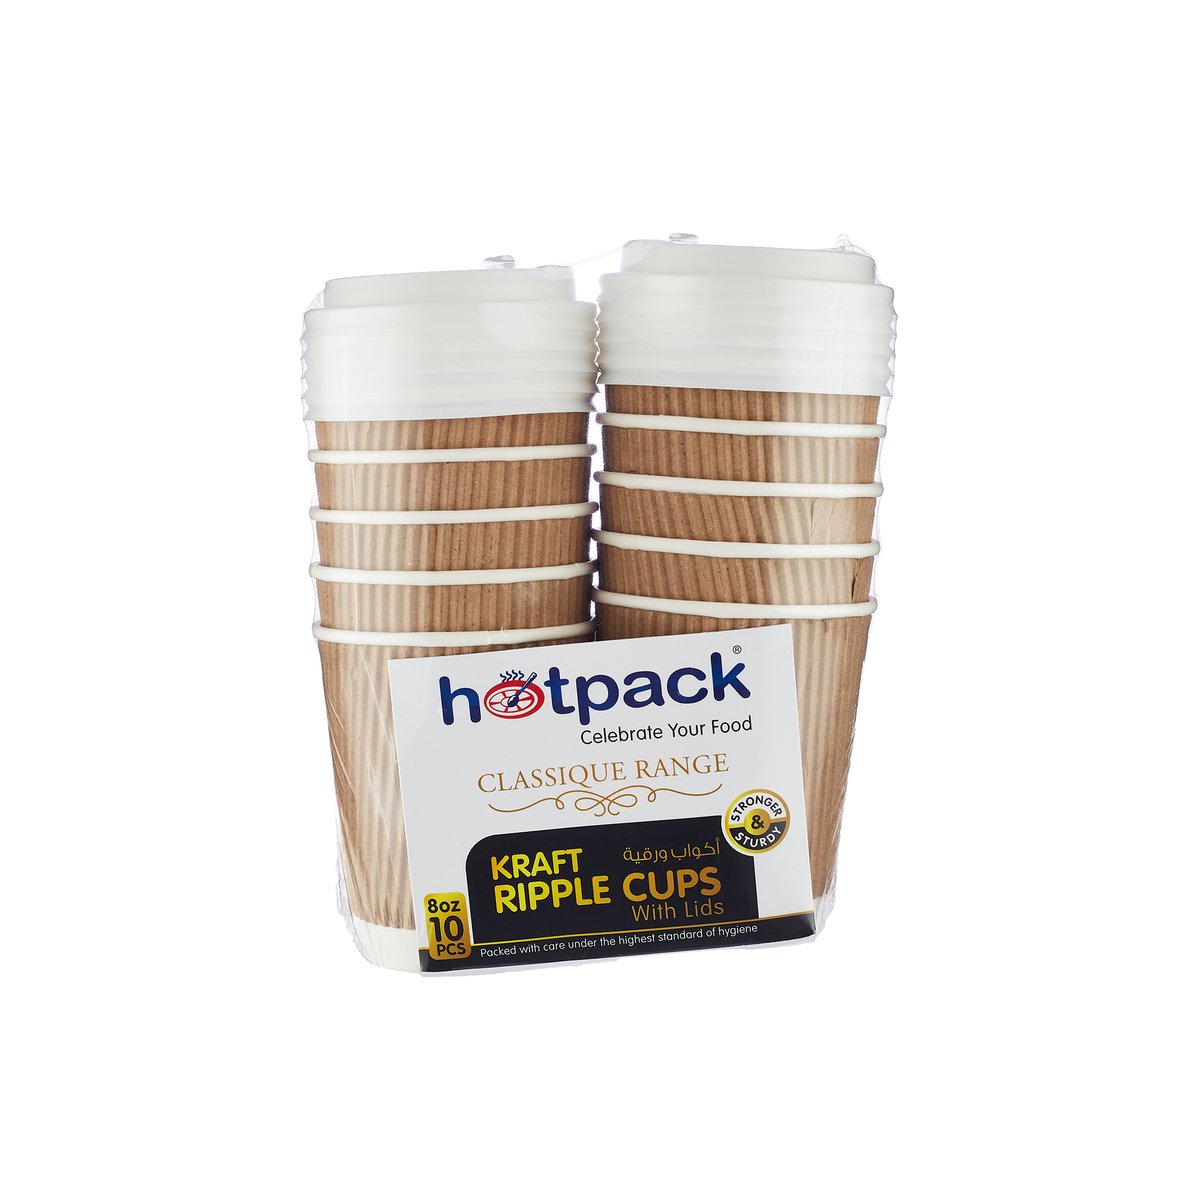 Hotpack Kraft Ripple Cups With Lids Capacity 8oz 10pcs